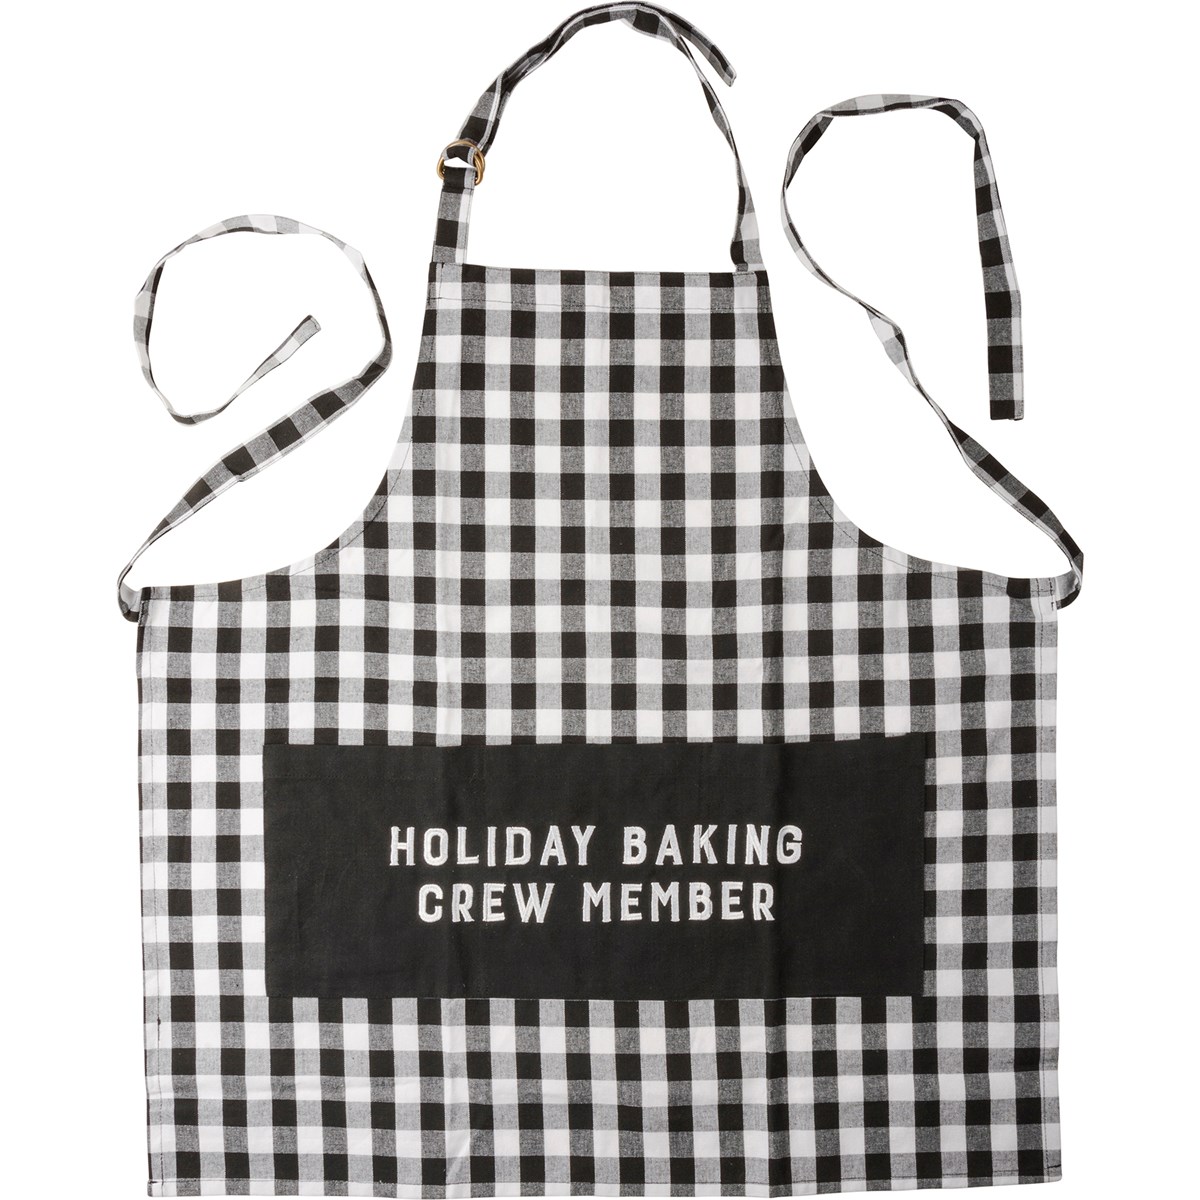 Holiday Baking Crew Member Apron - Cotton, Metal